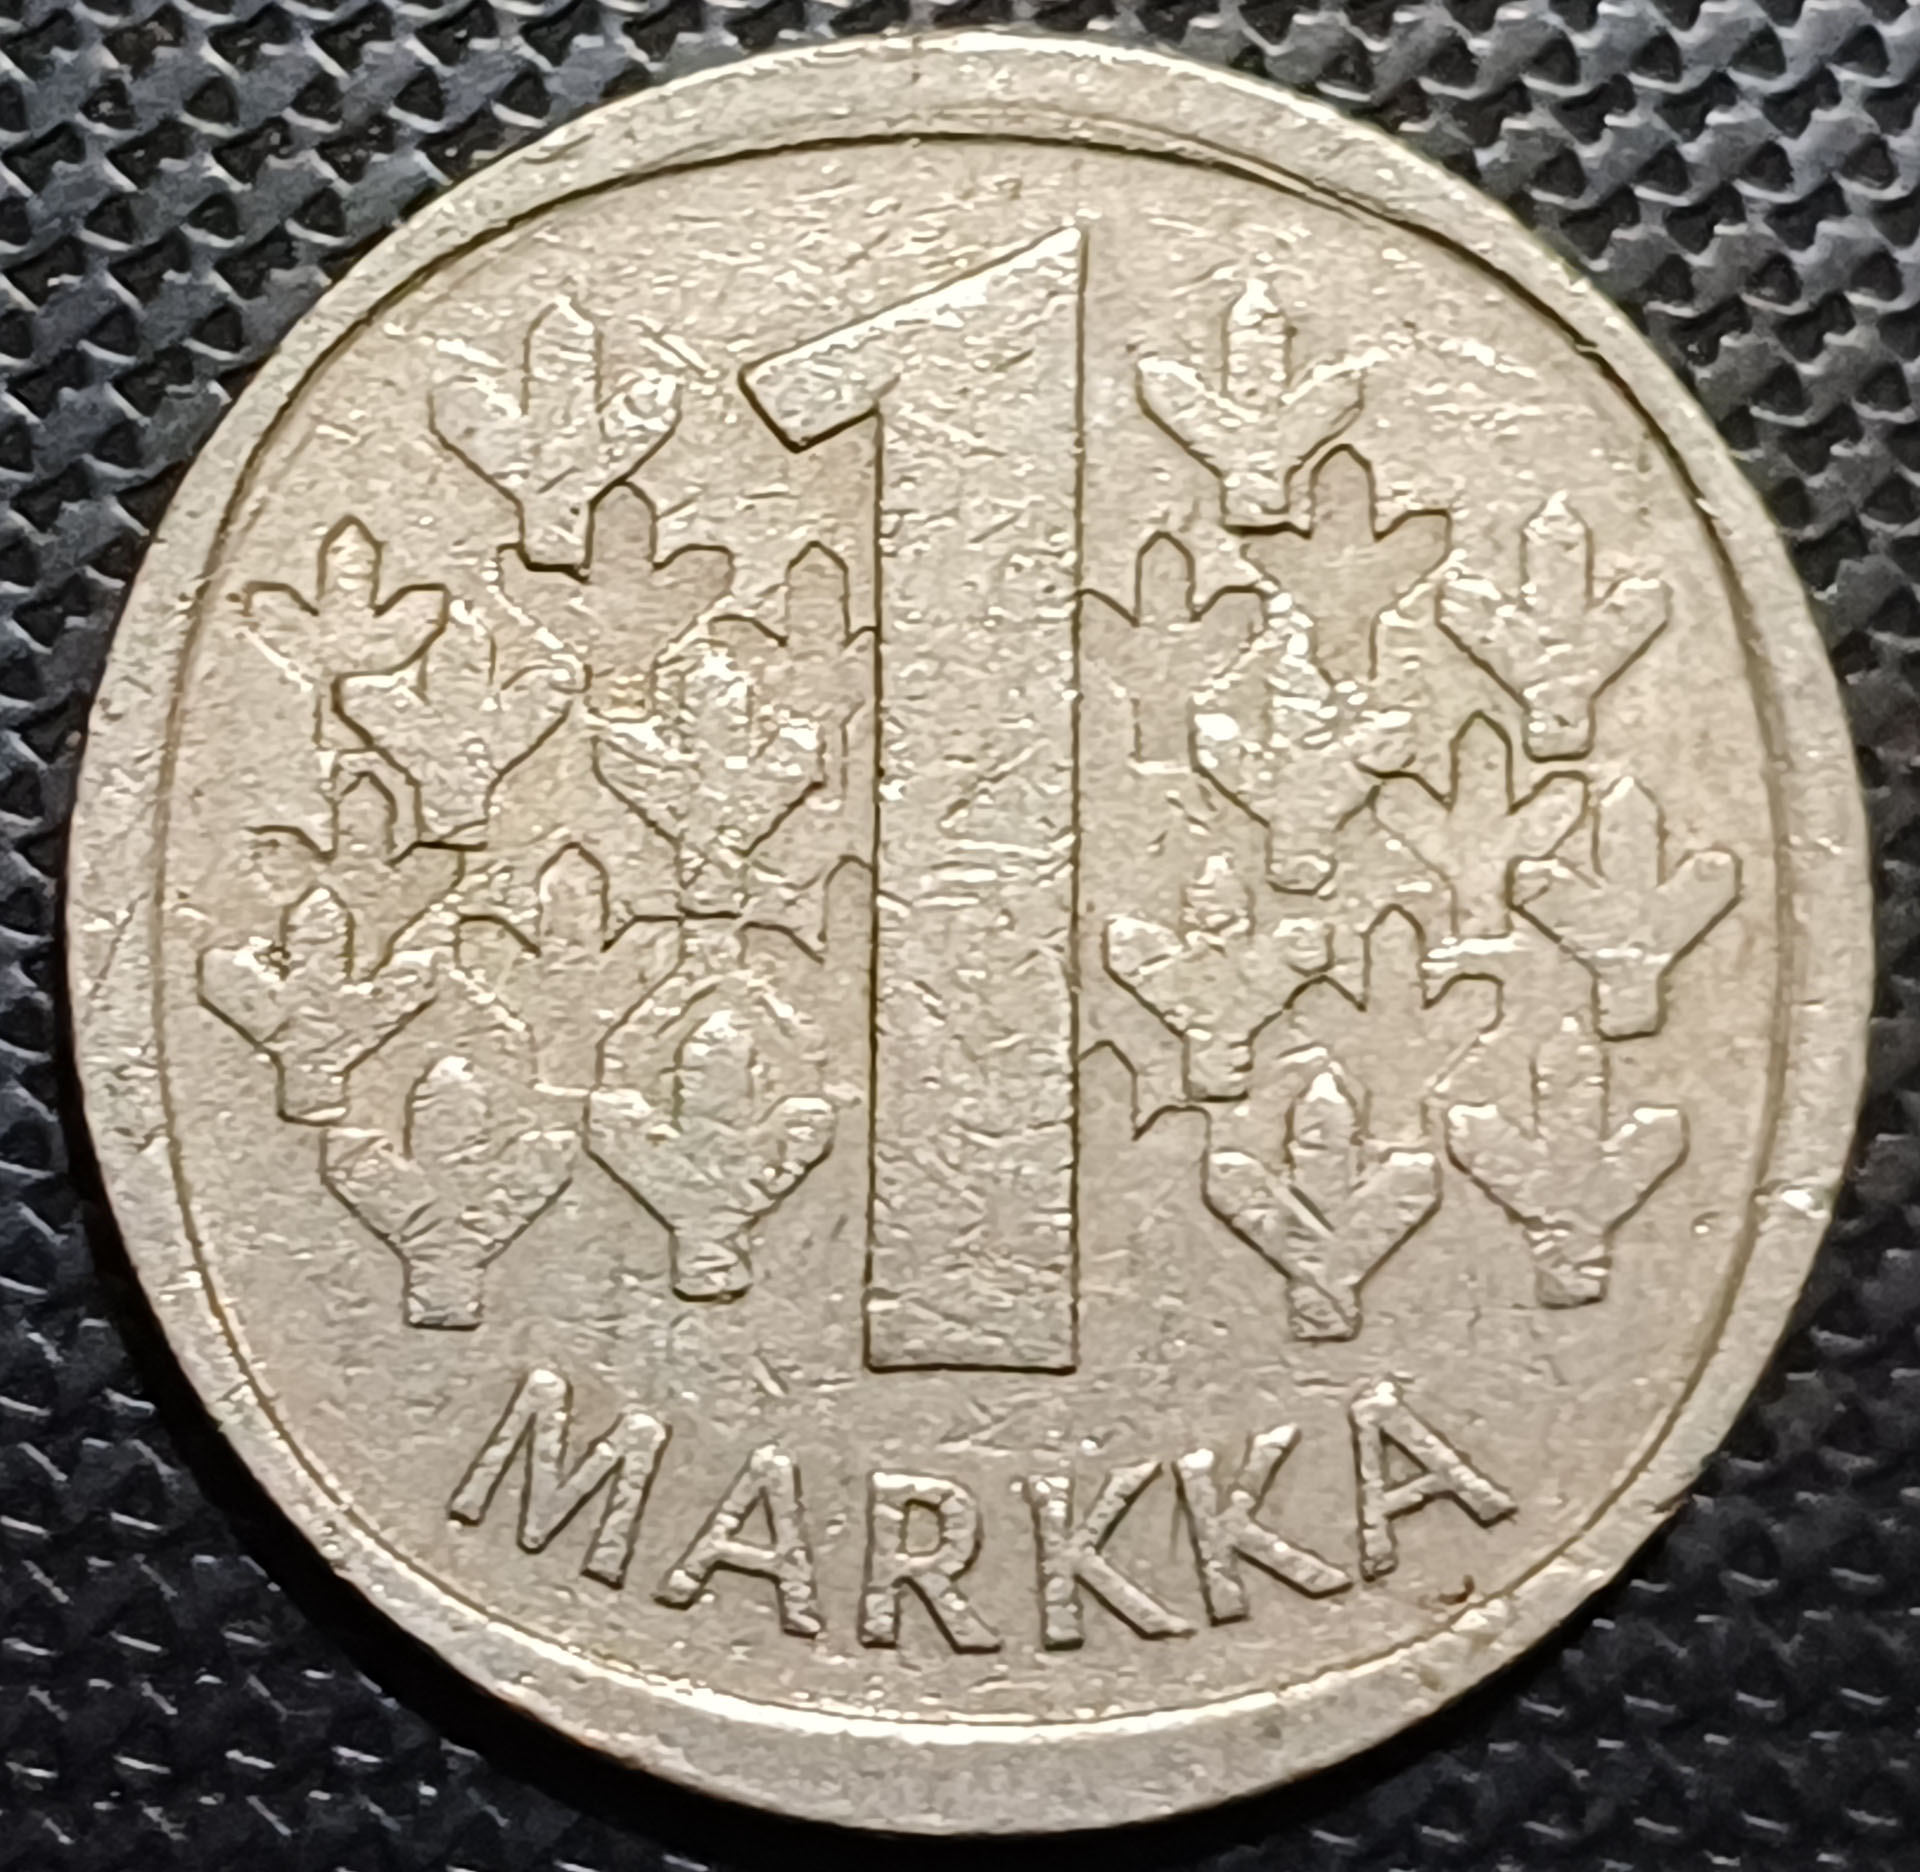 SUOMEN TASAVALTA (FINLAND) 1 MARKKA COIN - NORDIC COUNTRY, COPPER-NICKEL  COIN